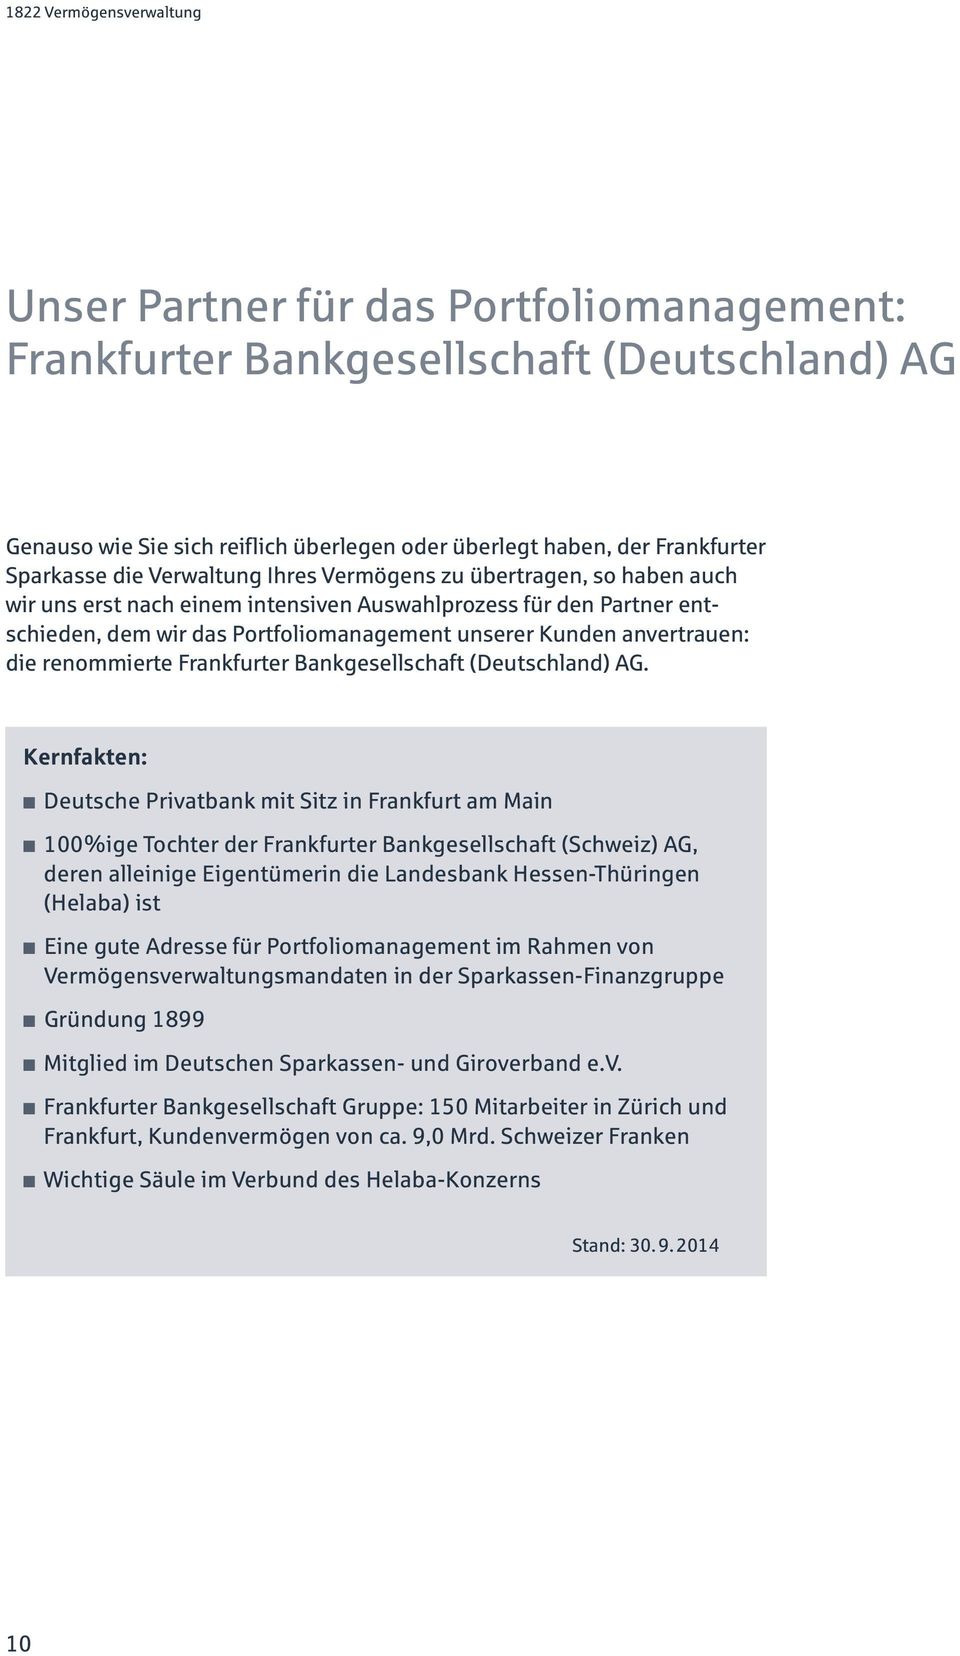 Frankfurter Bankgesellschaft (Deutschland) AG.